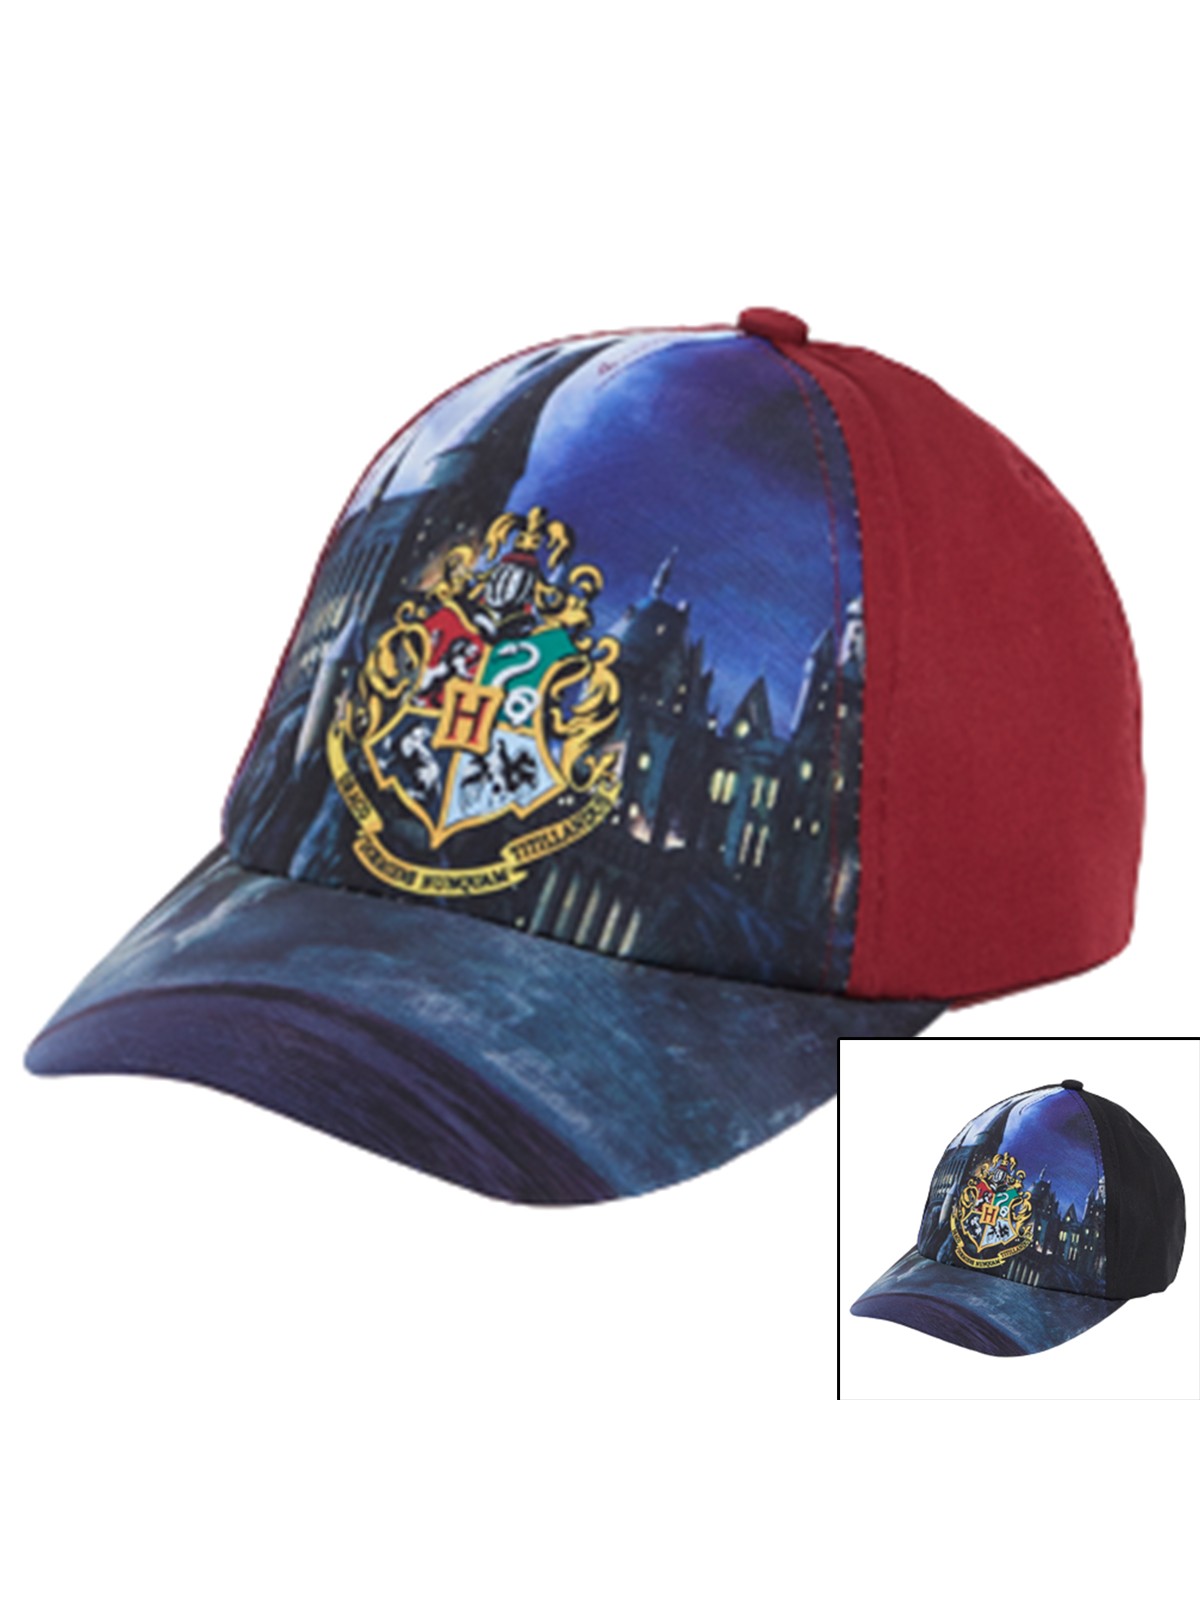 Harry Potter Cappellino con visiera